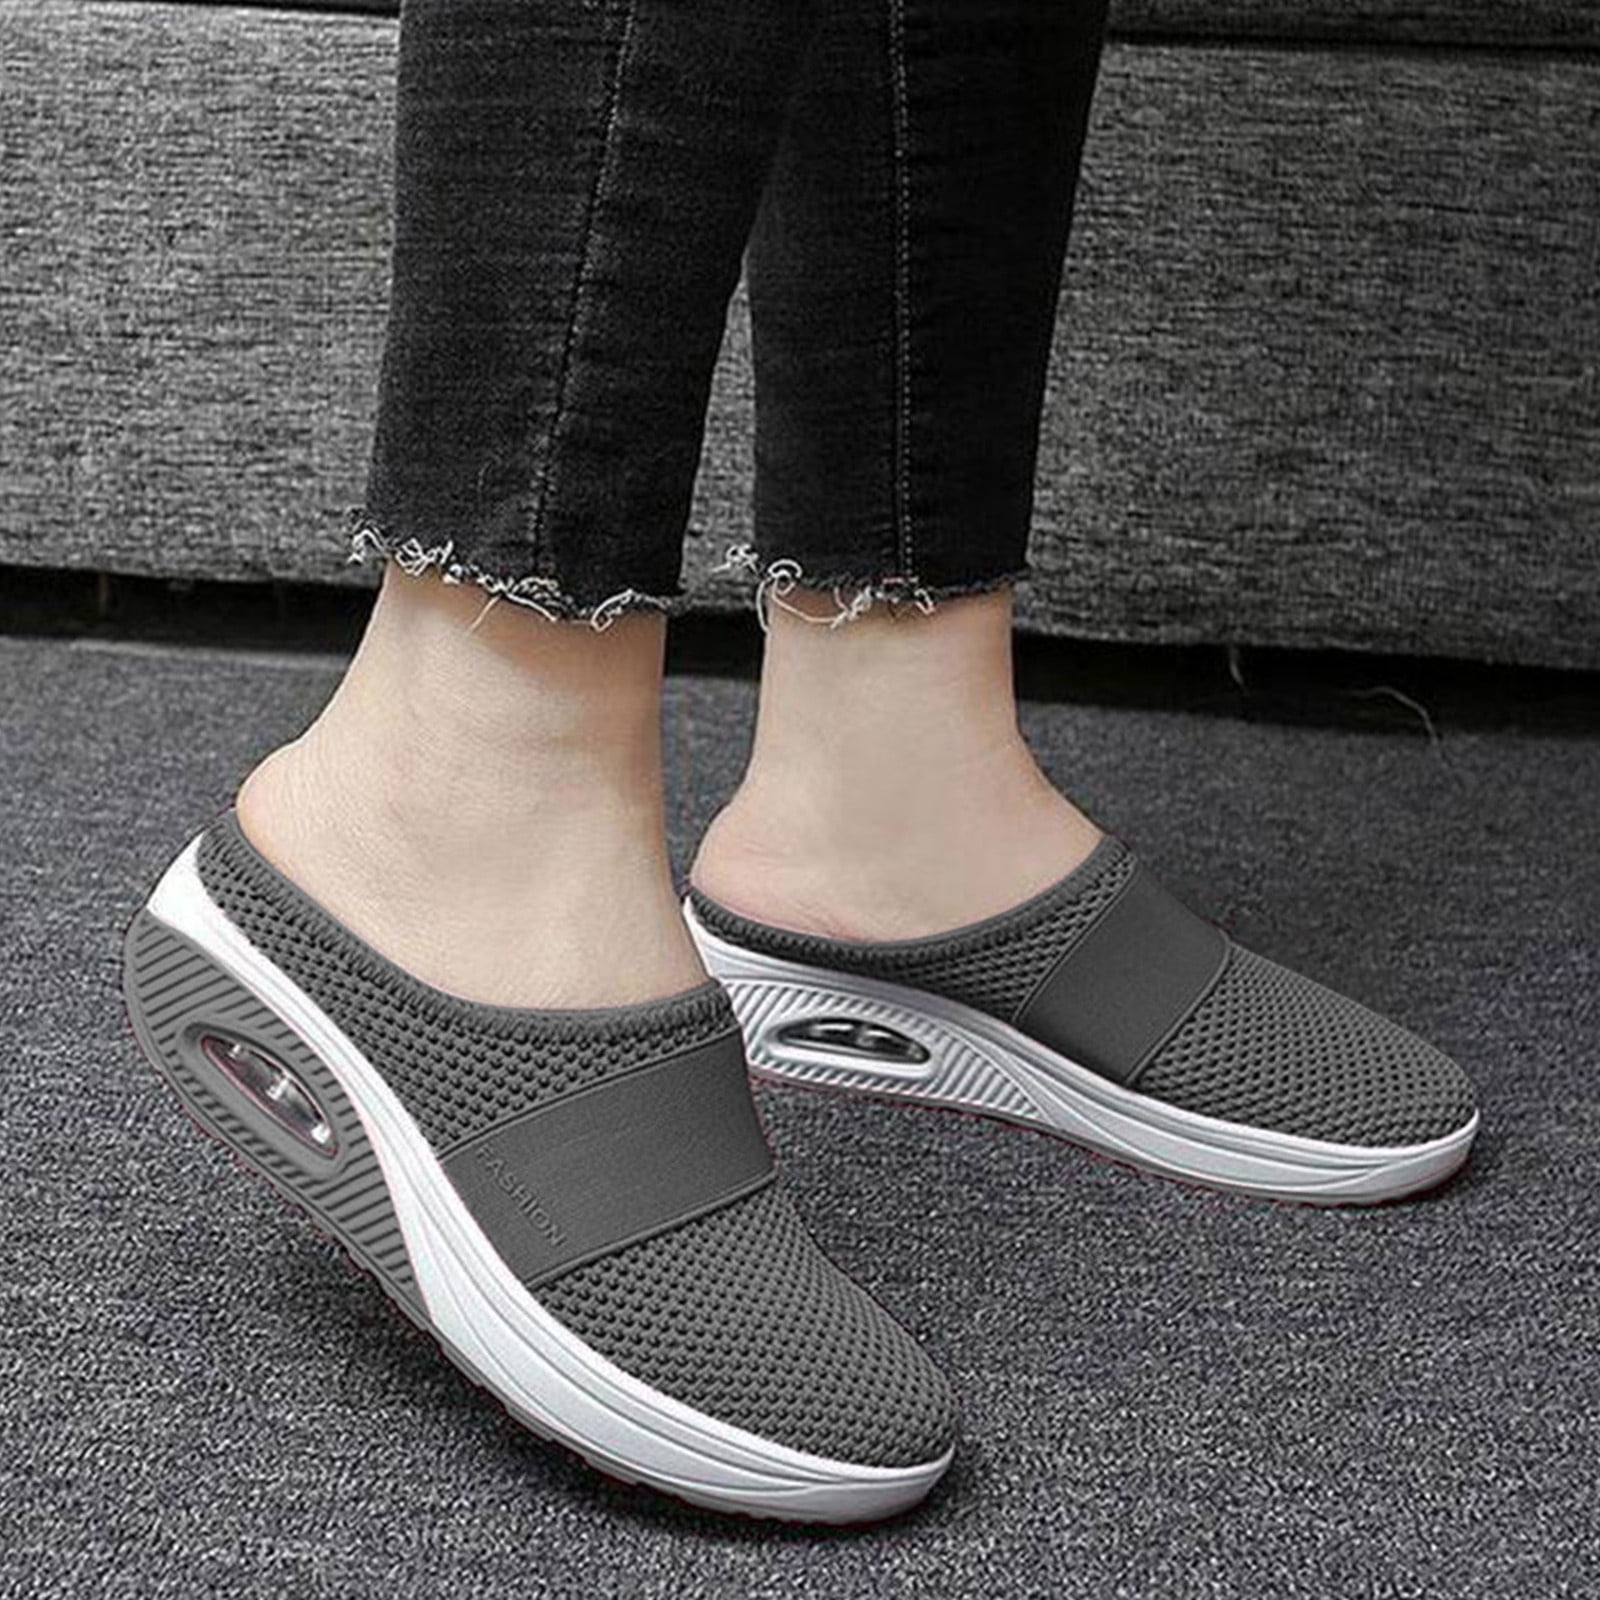 OYNAN Air Cushion Slip-On Walking Shoes Orthopedic Diabetic Walking Shoes for Womens 